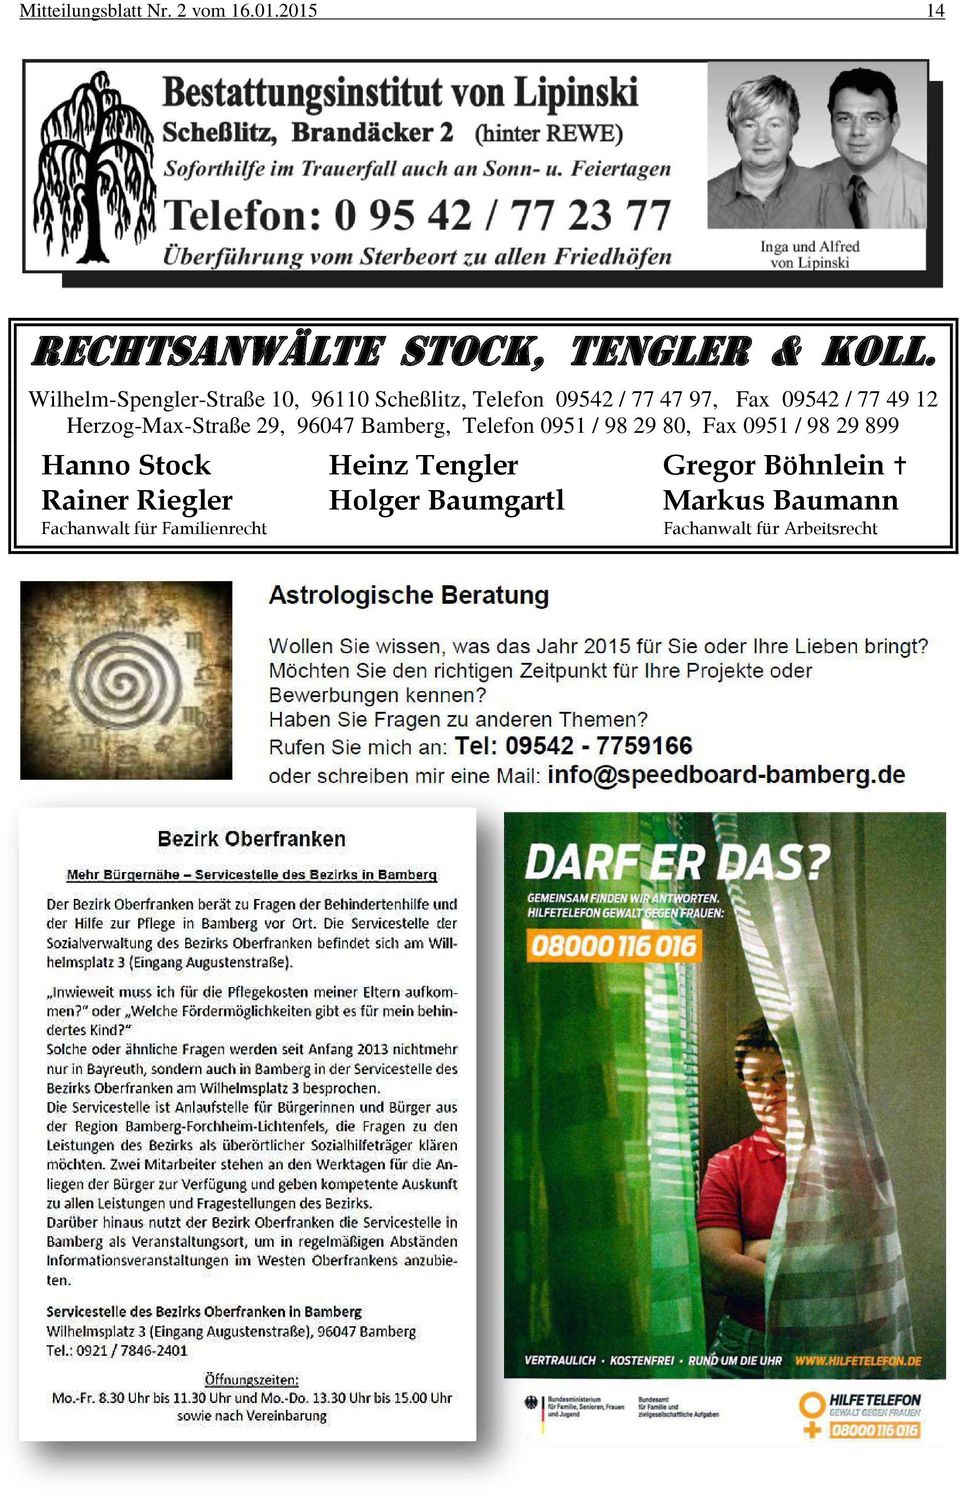 Herzog-Max-Straße 29, 96047 Bamberg, Telefon 0951 / 98 29 80, Fax 0951 / 98 29 899 Hanno Stock